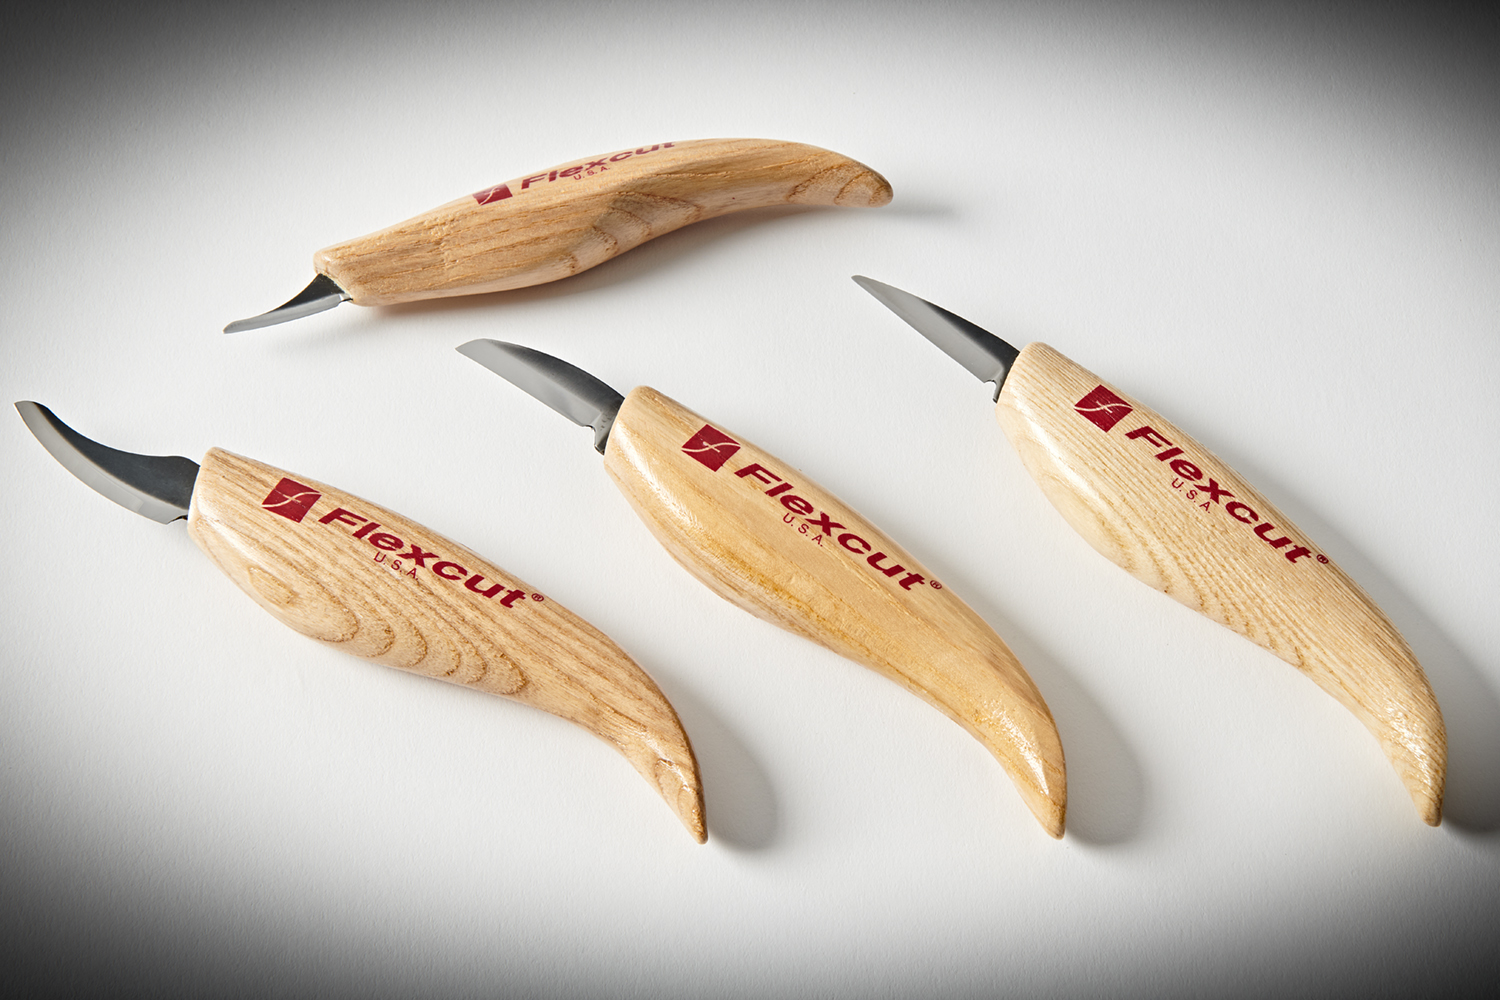 Flexcut Carving Knives